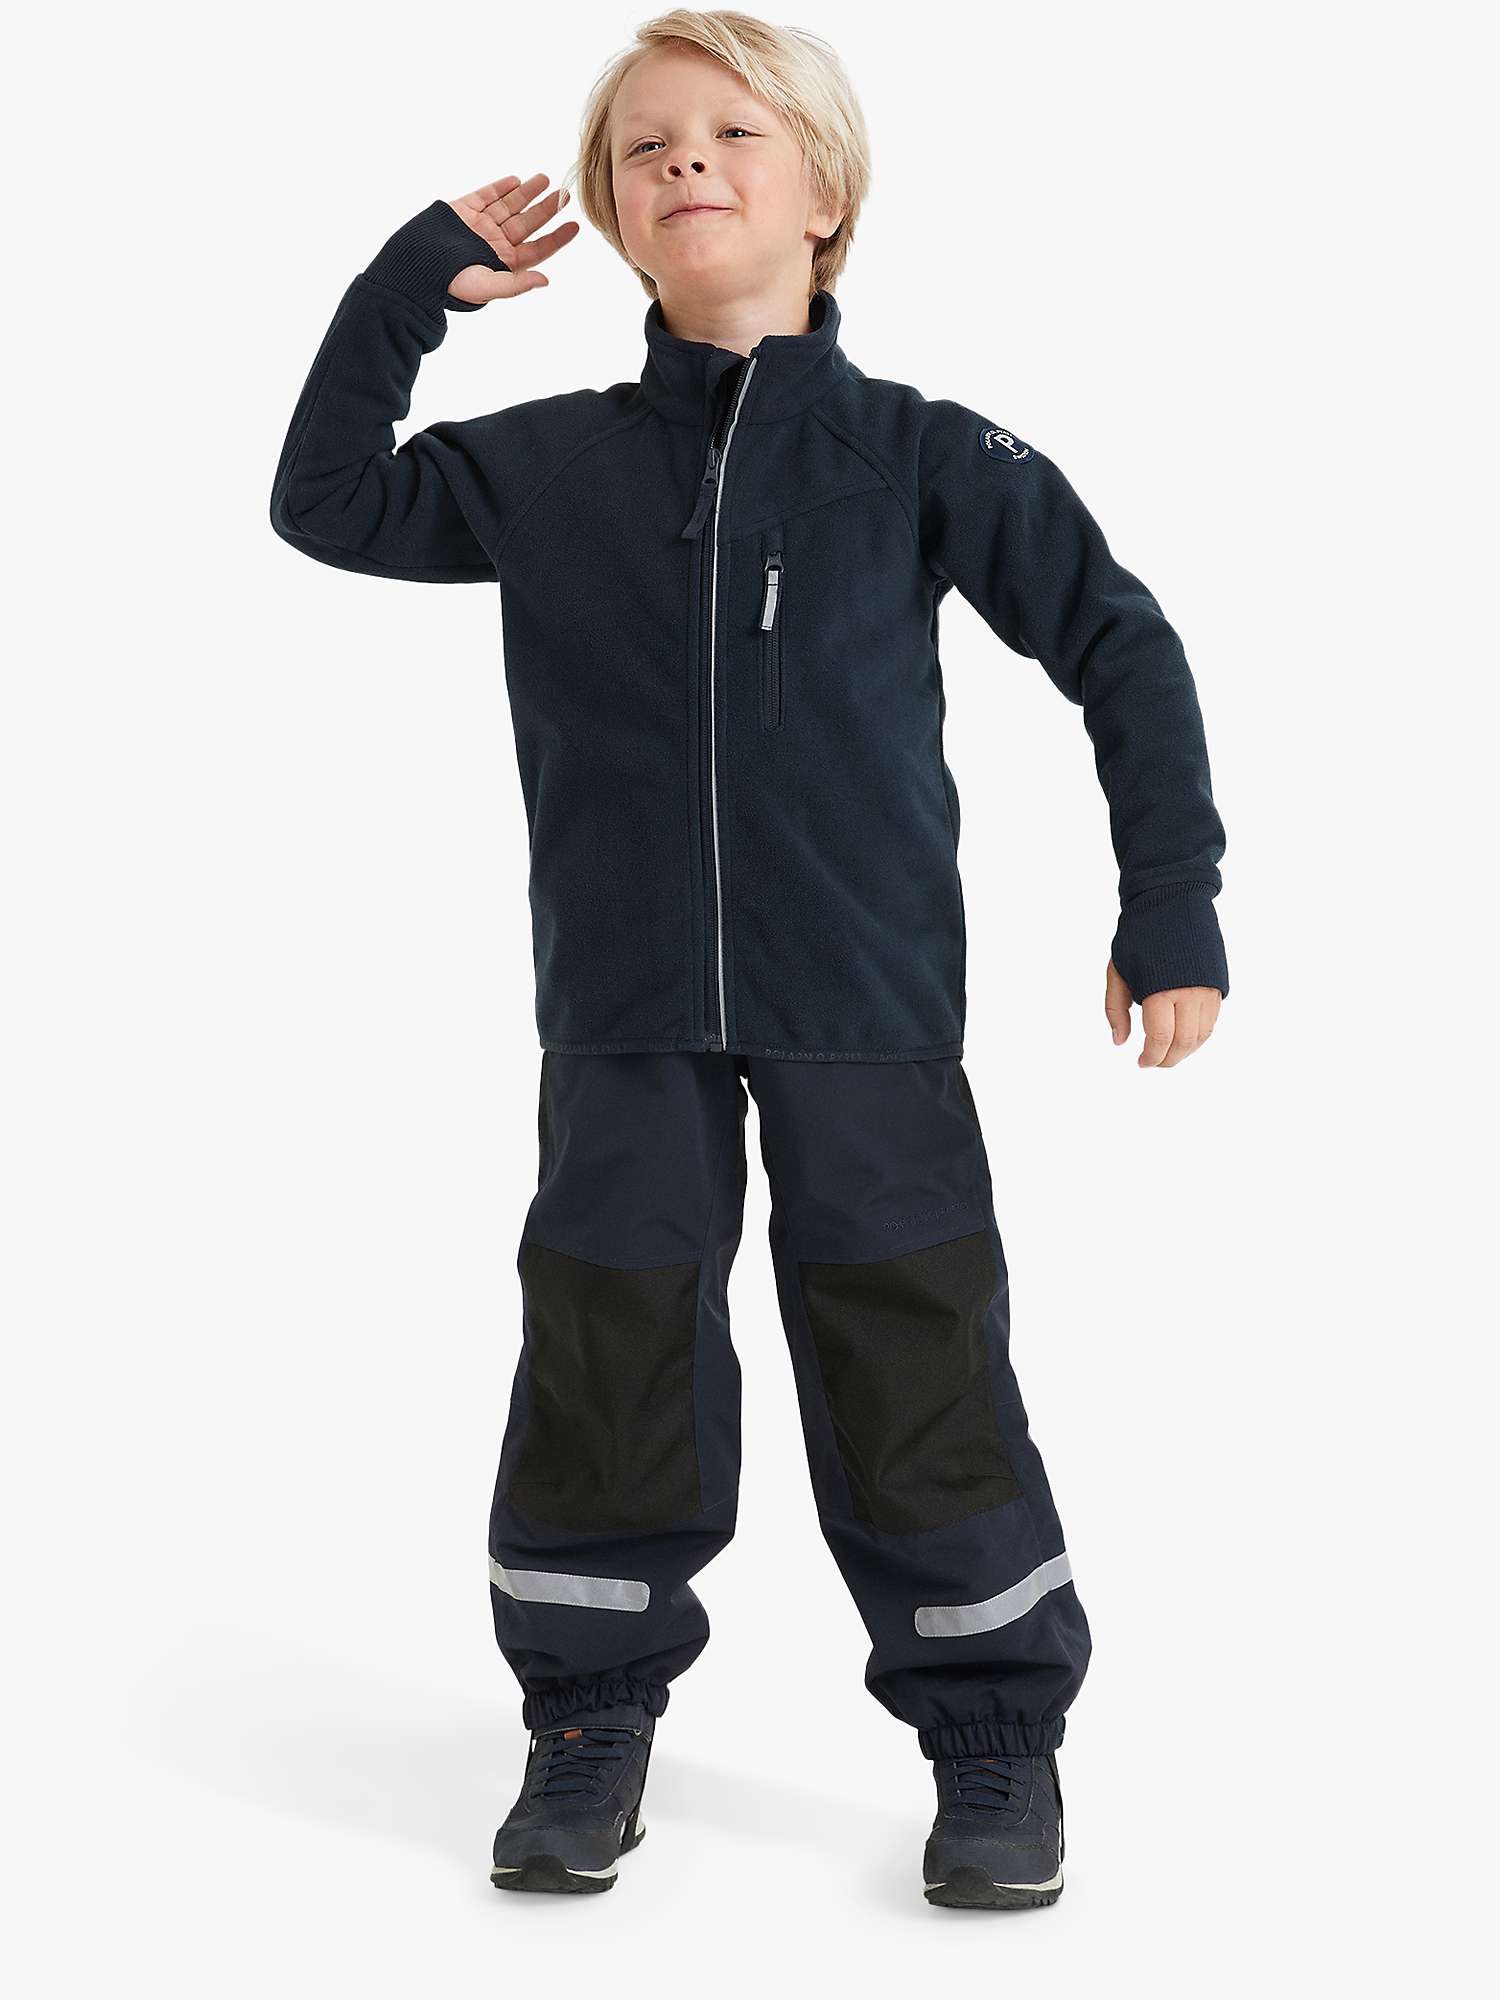 Buy Polarn O. Pyret Kids' Fleece Jacket, Navy Online at johnlewis.com